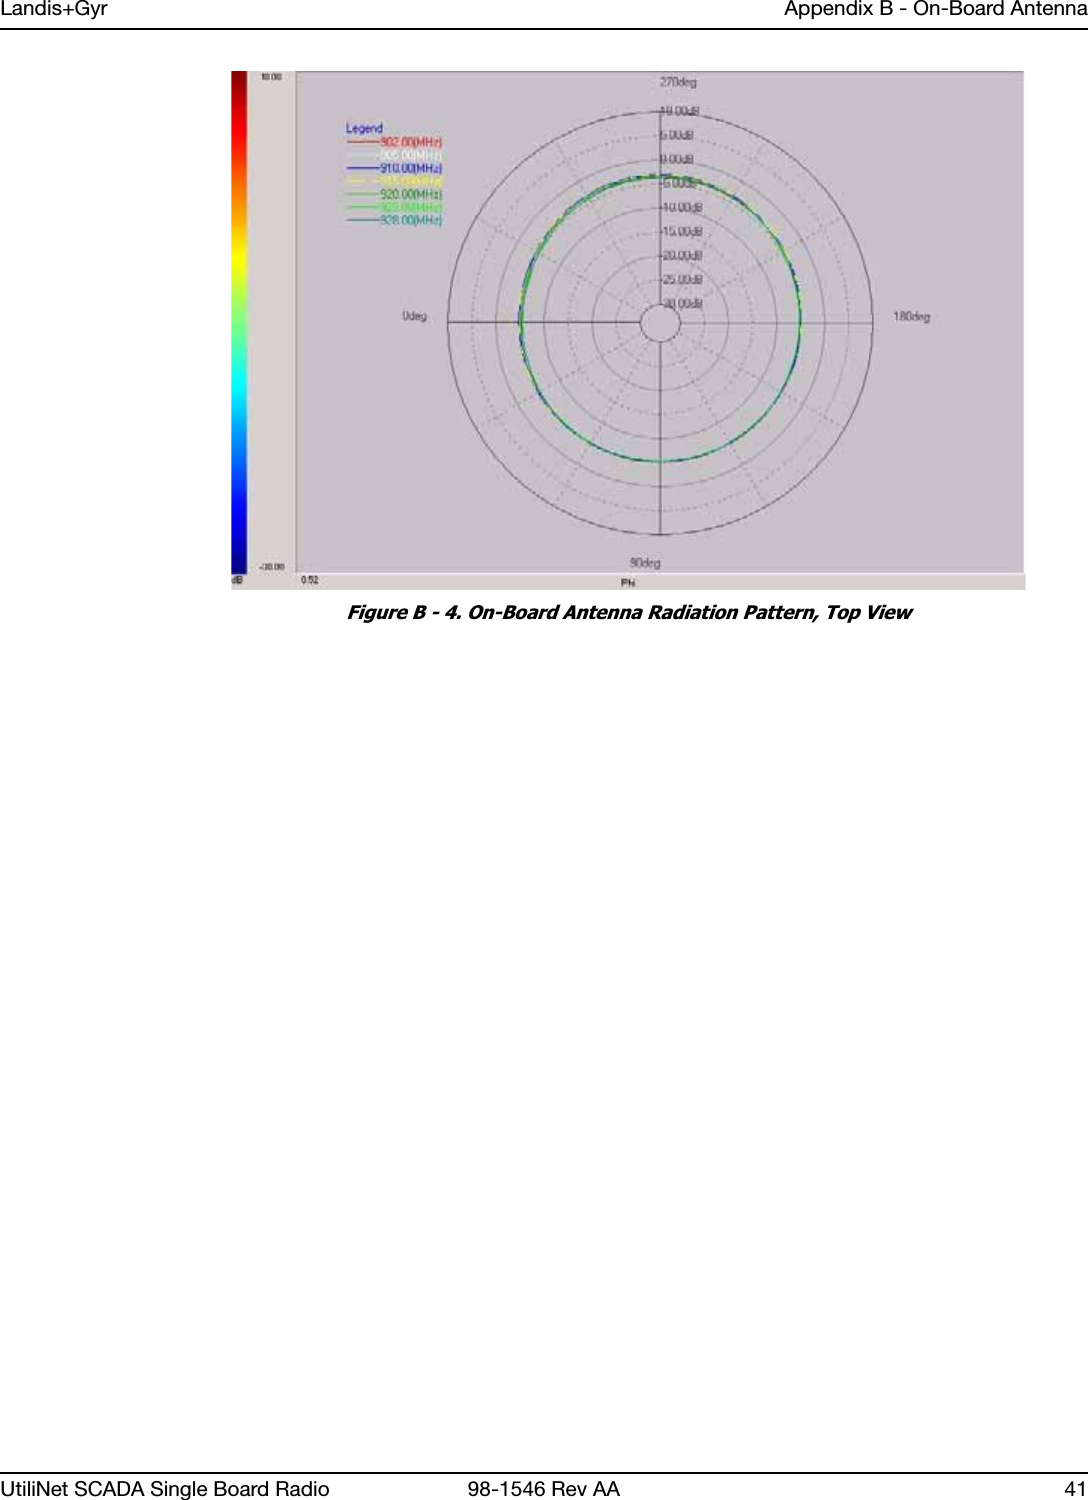 Landis+Gyr Appendix B - On-Board AntennaUtiliNet SCADA Single Board Radio 98-1546 Rev AA 41Figure B - 4. On-Board Antenna Radiation Pattern, Top View